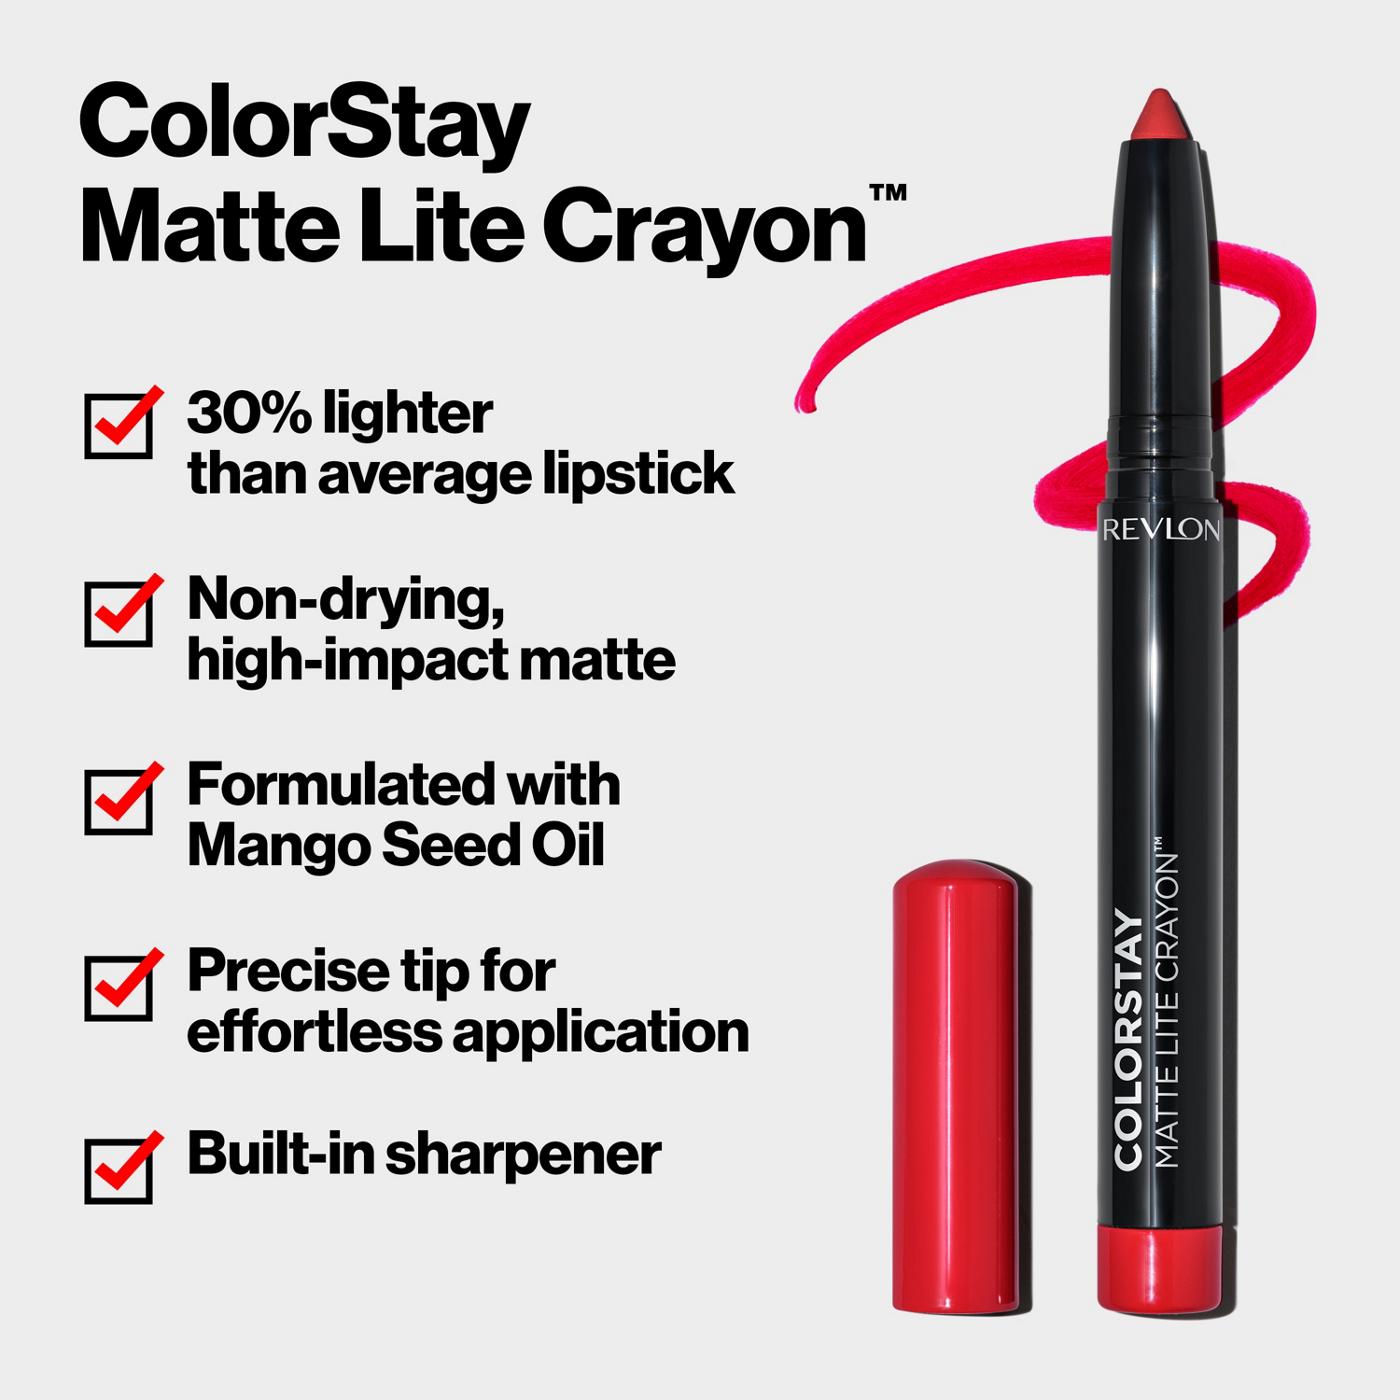 Revlon ColorStay Matte Lite Crayon Lipstick - On Cloud Wine; image 2 of 7